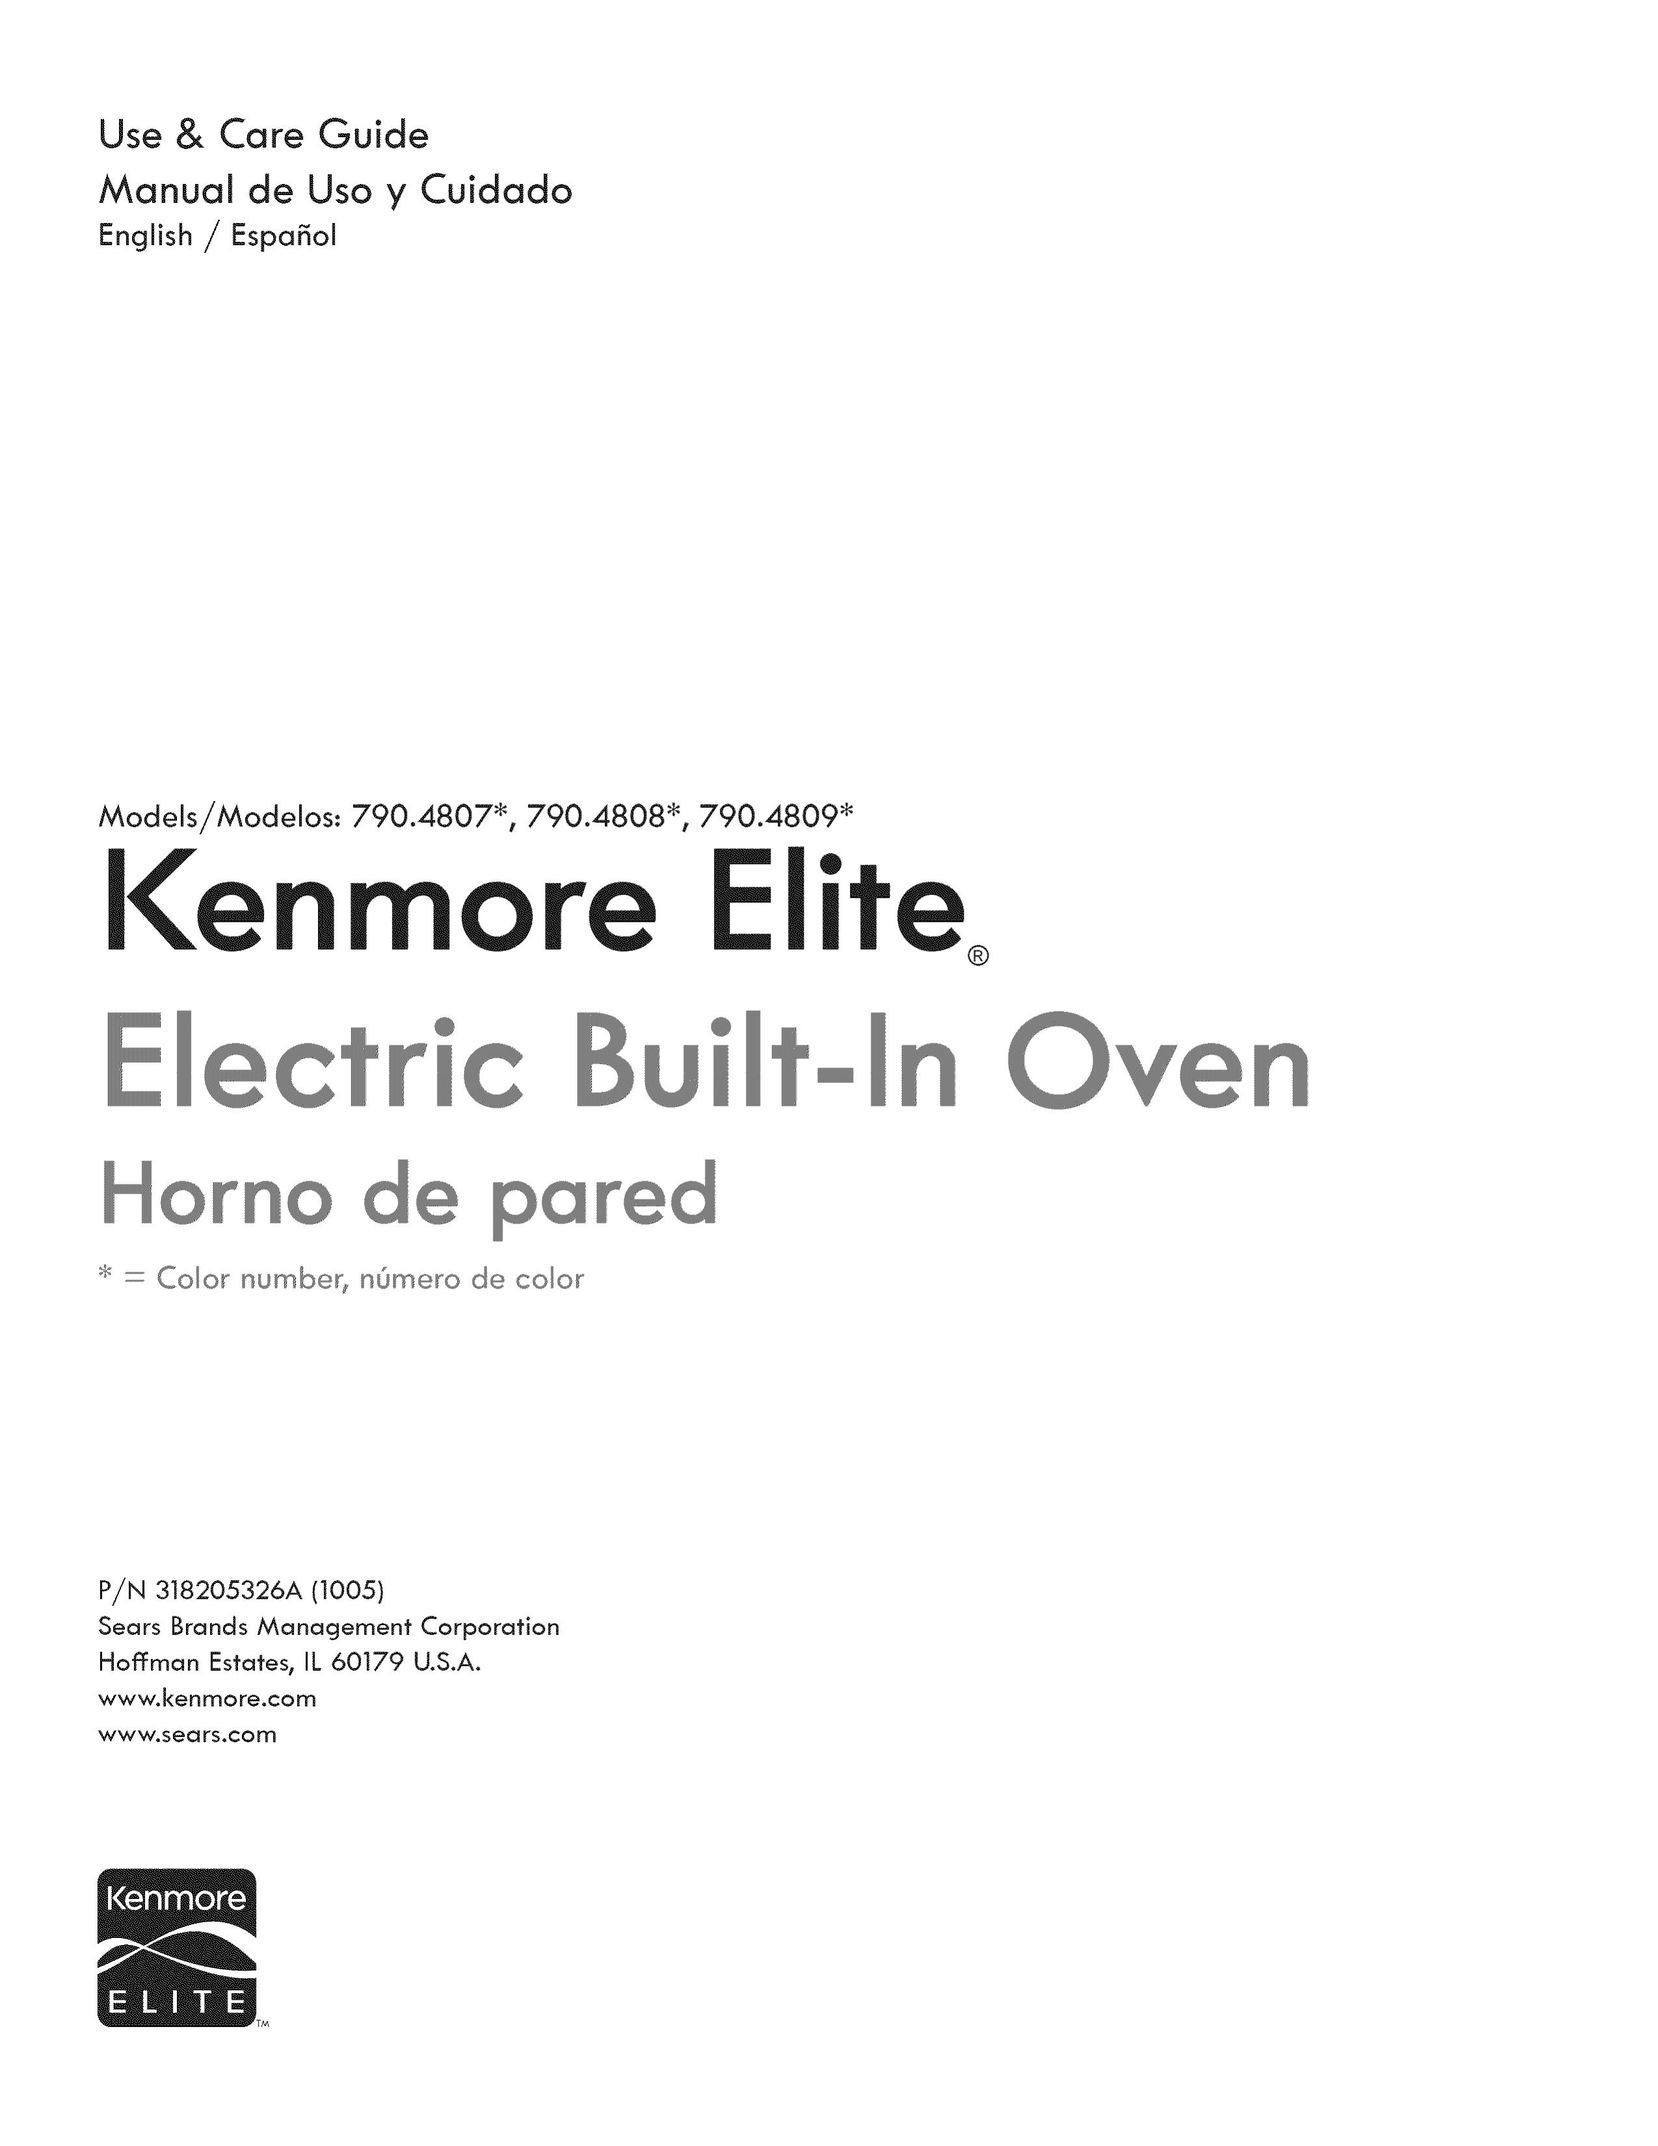 Kenmore 790.4809 Oven User Manual